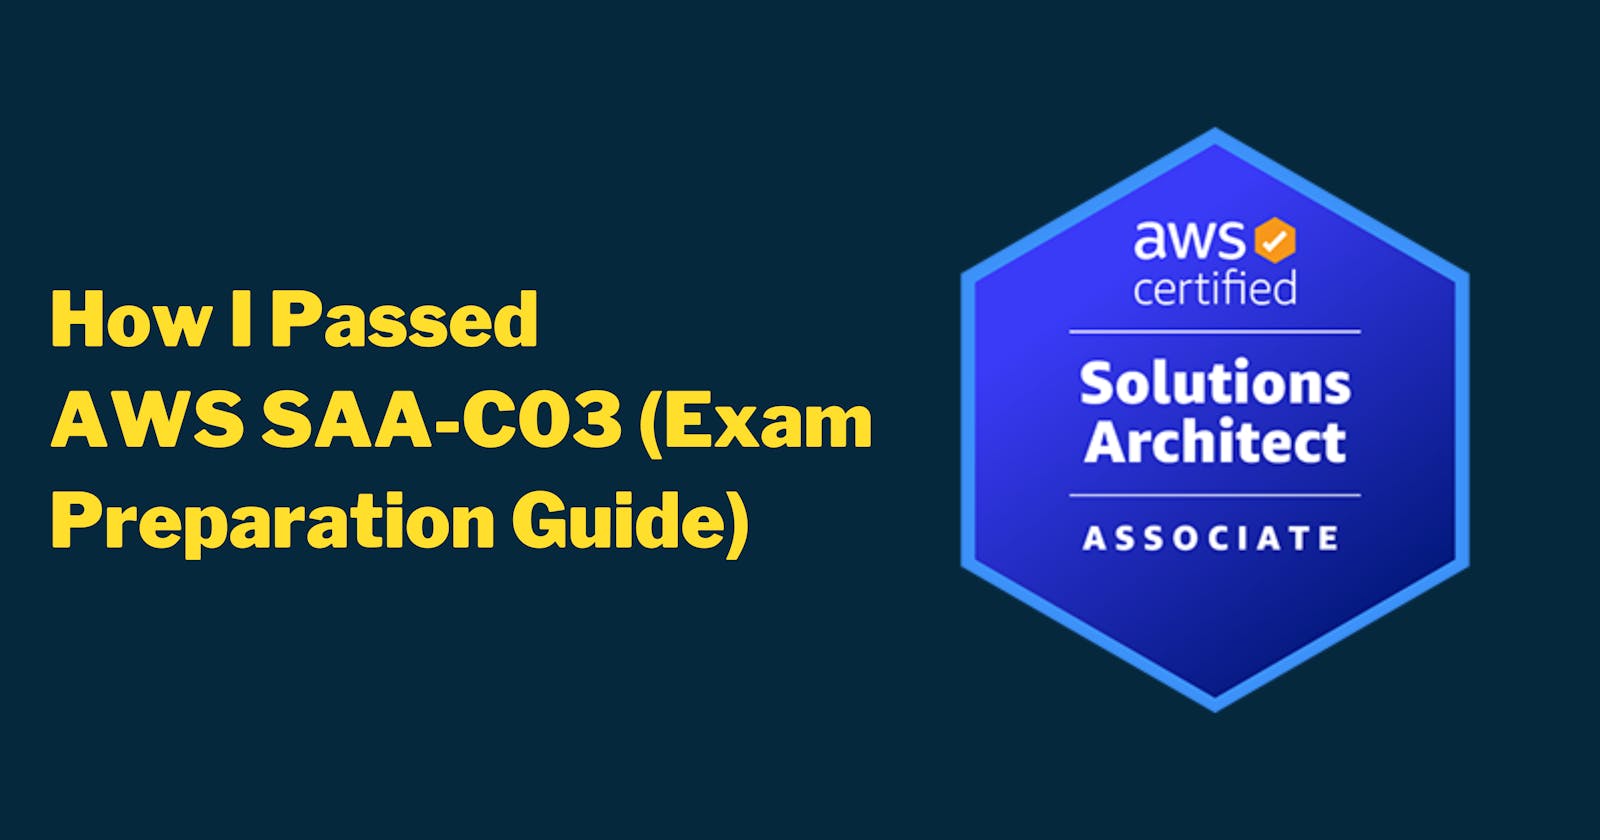 How I Passed AWS SAA-C03 (Exam Preparation Guide)